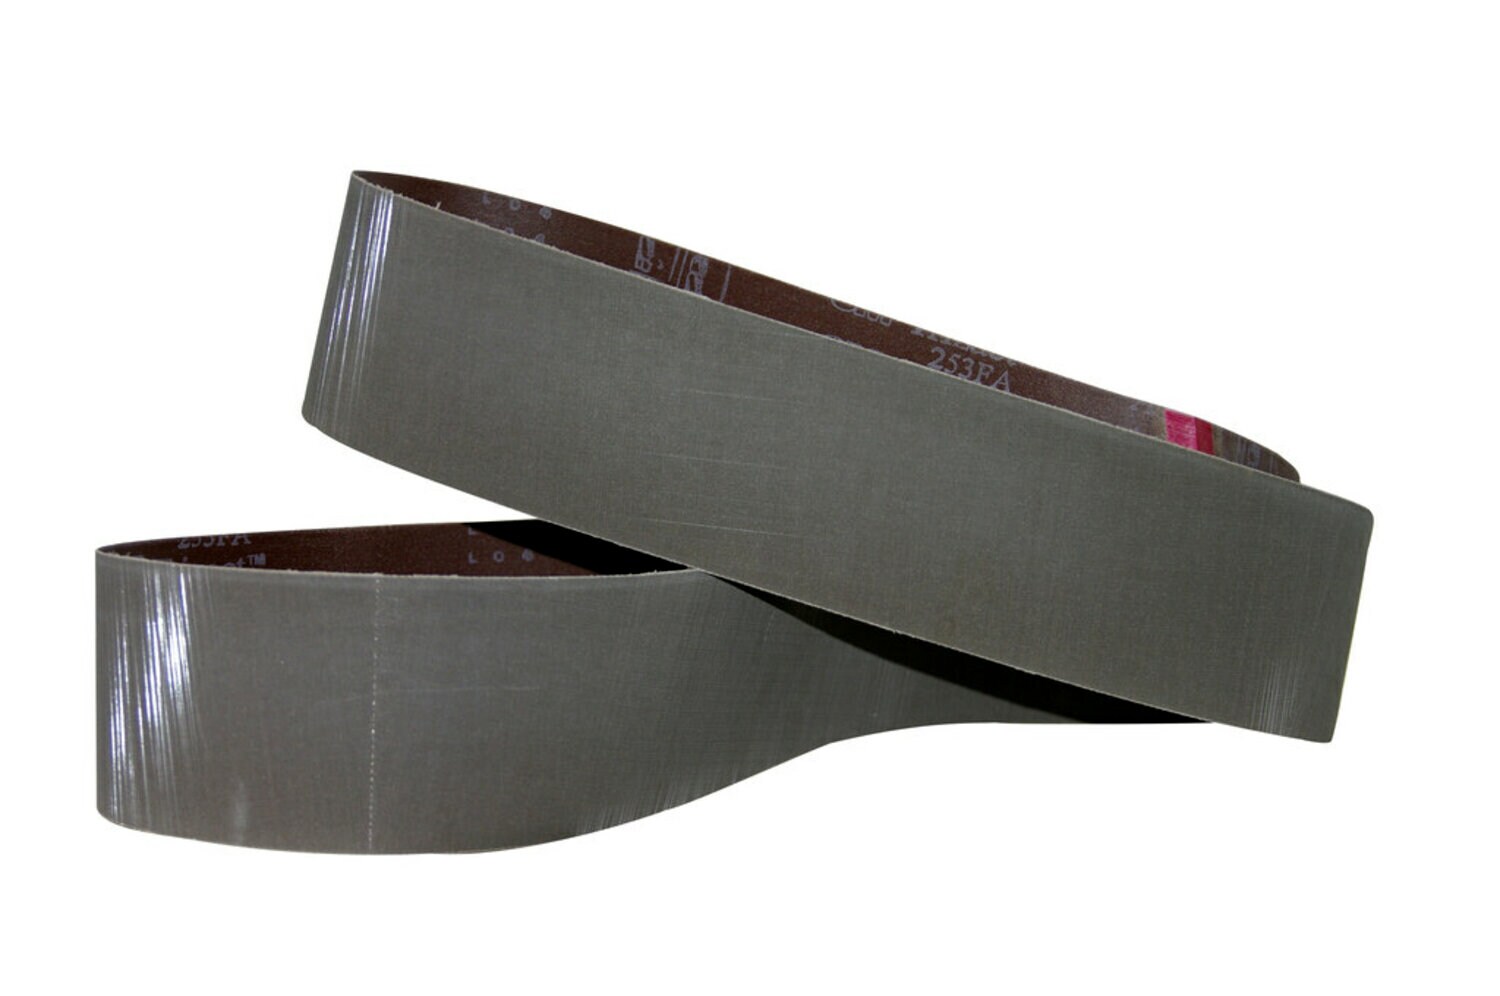 7010364862 - 3M Trizact Cloth Belt 253FA, A16 XF-weight, 4 in x 54 in, Film-lok,
Full-flex, 50 ea/Case